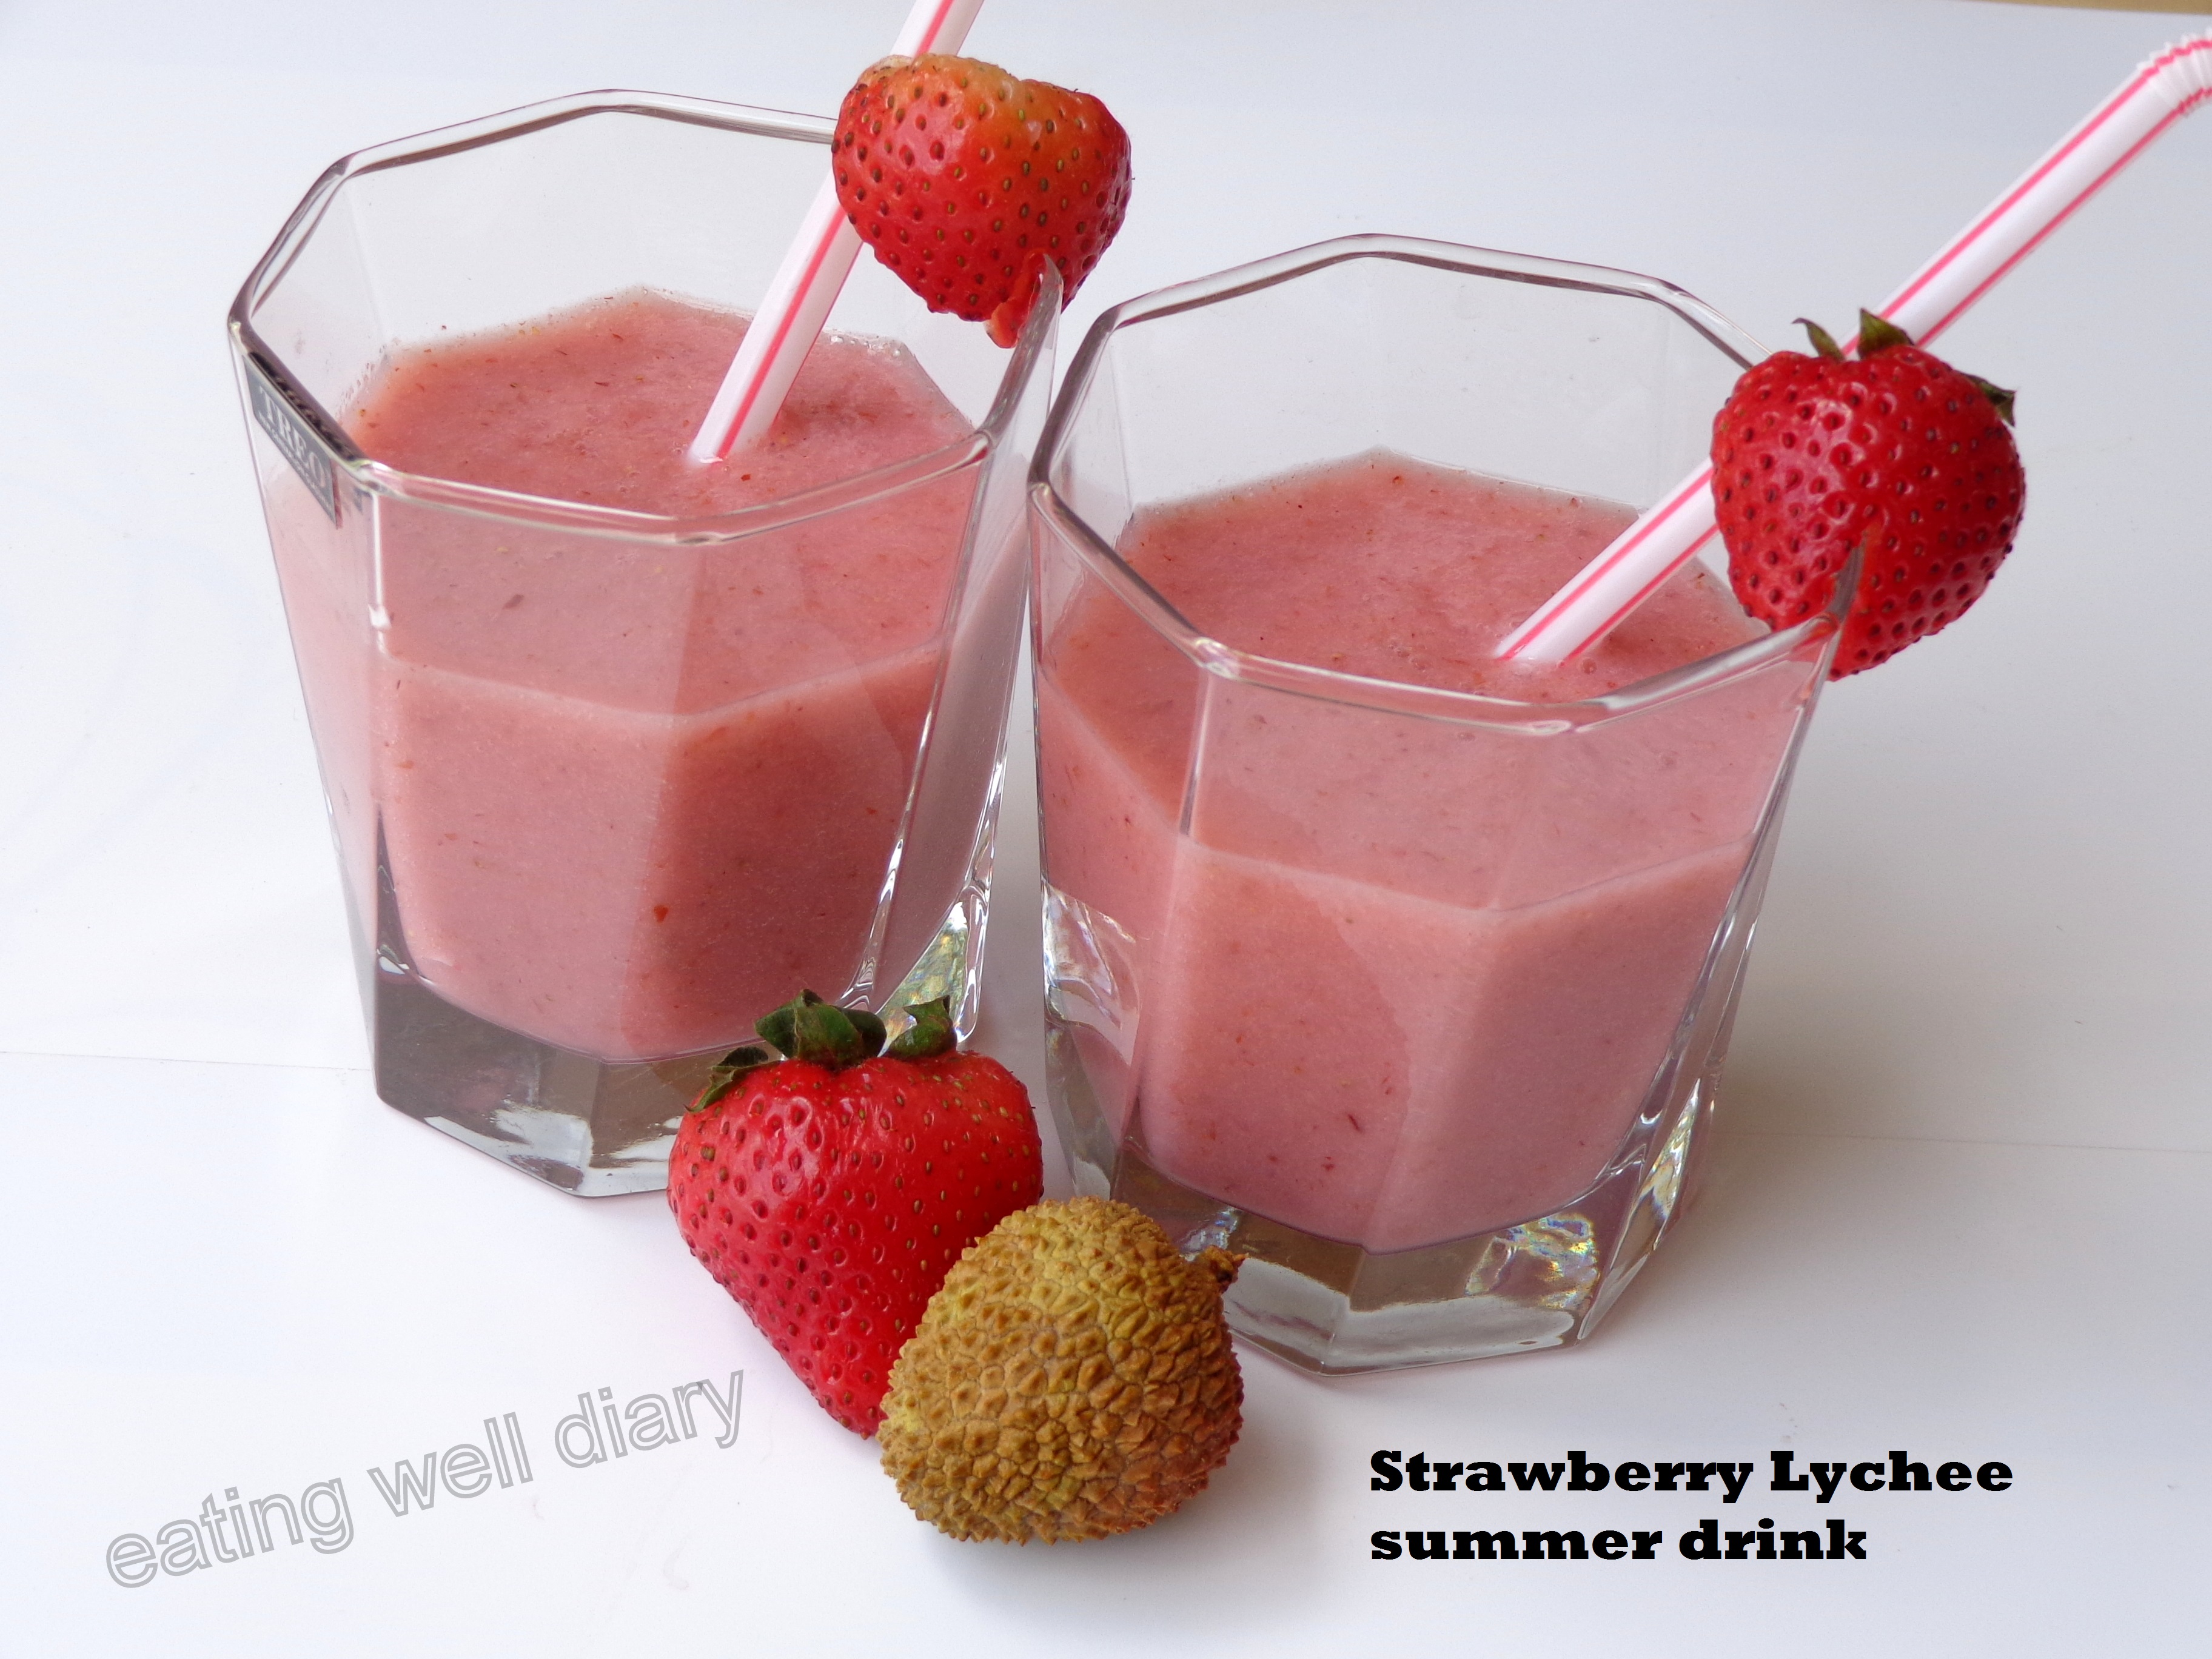 Strawberry Lychee summer drink